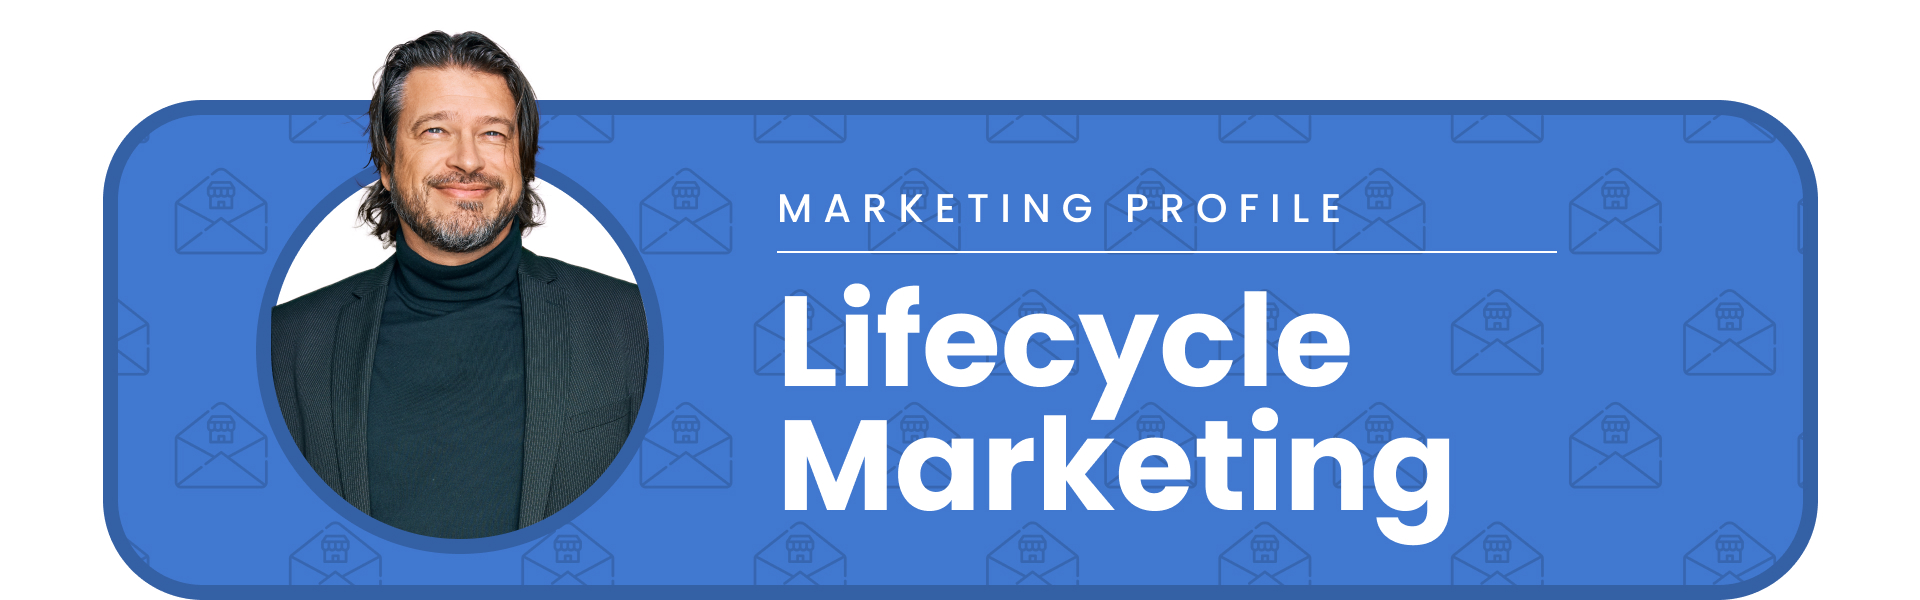 Graphic reading “Marketing Profile: Lifecycle Marketing”